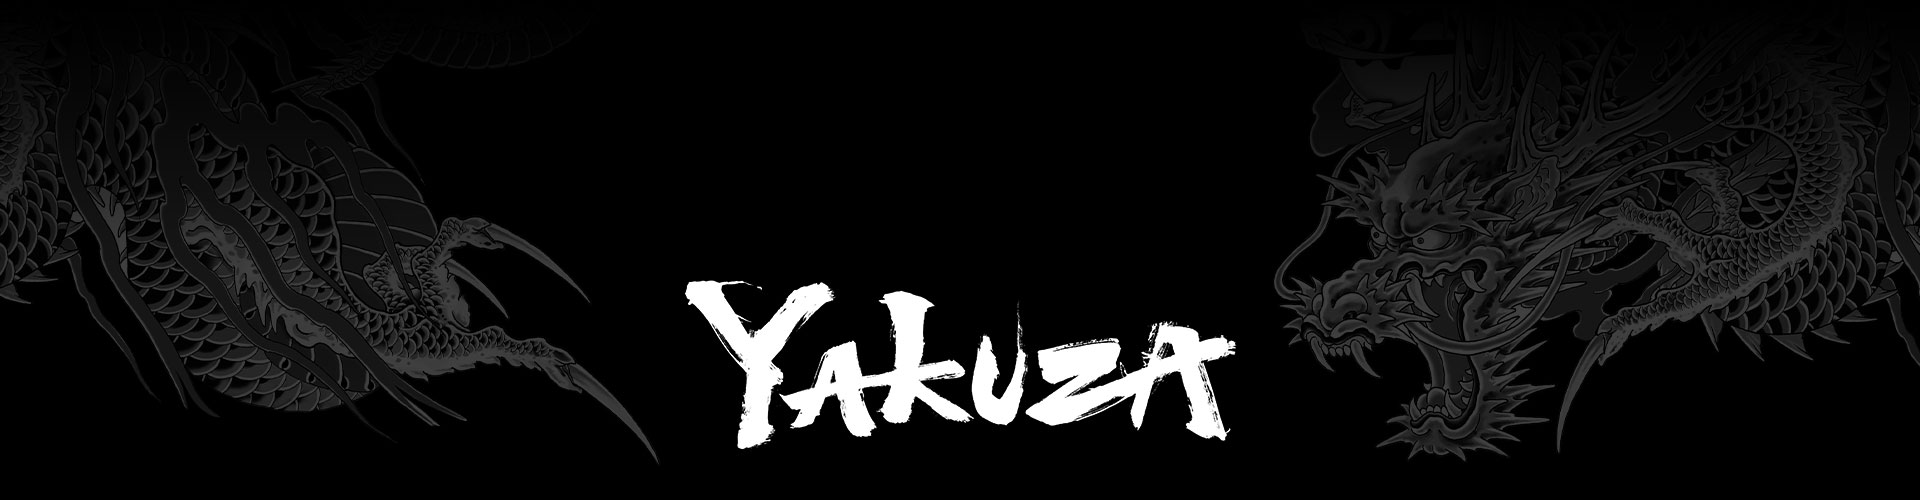 Solicitud Para Crear YKZ 2d069100-a104-4349-b8d8-74dca93d3e44.jpg?n=Yakuza-Franchise_Image-1084_About-Blade_Logo_1900x400